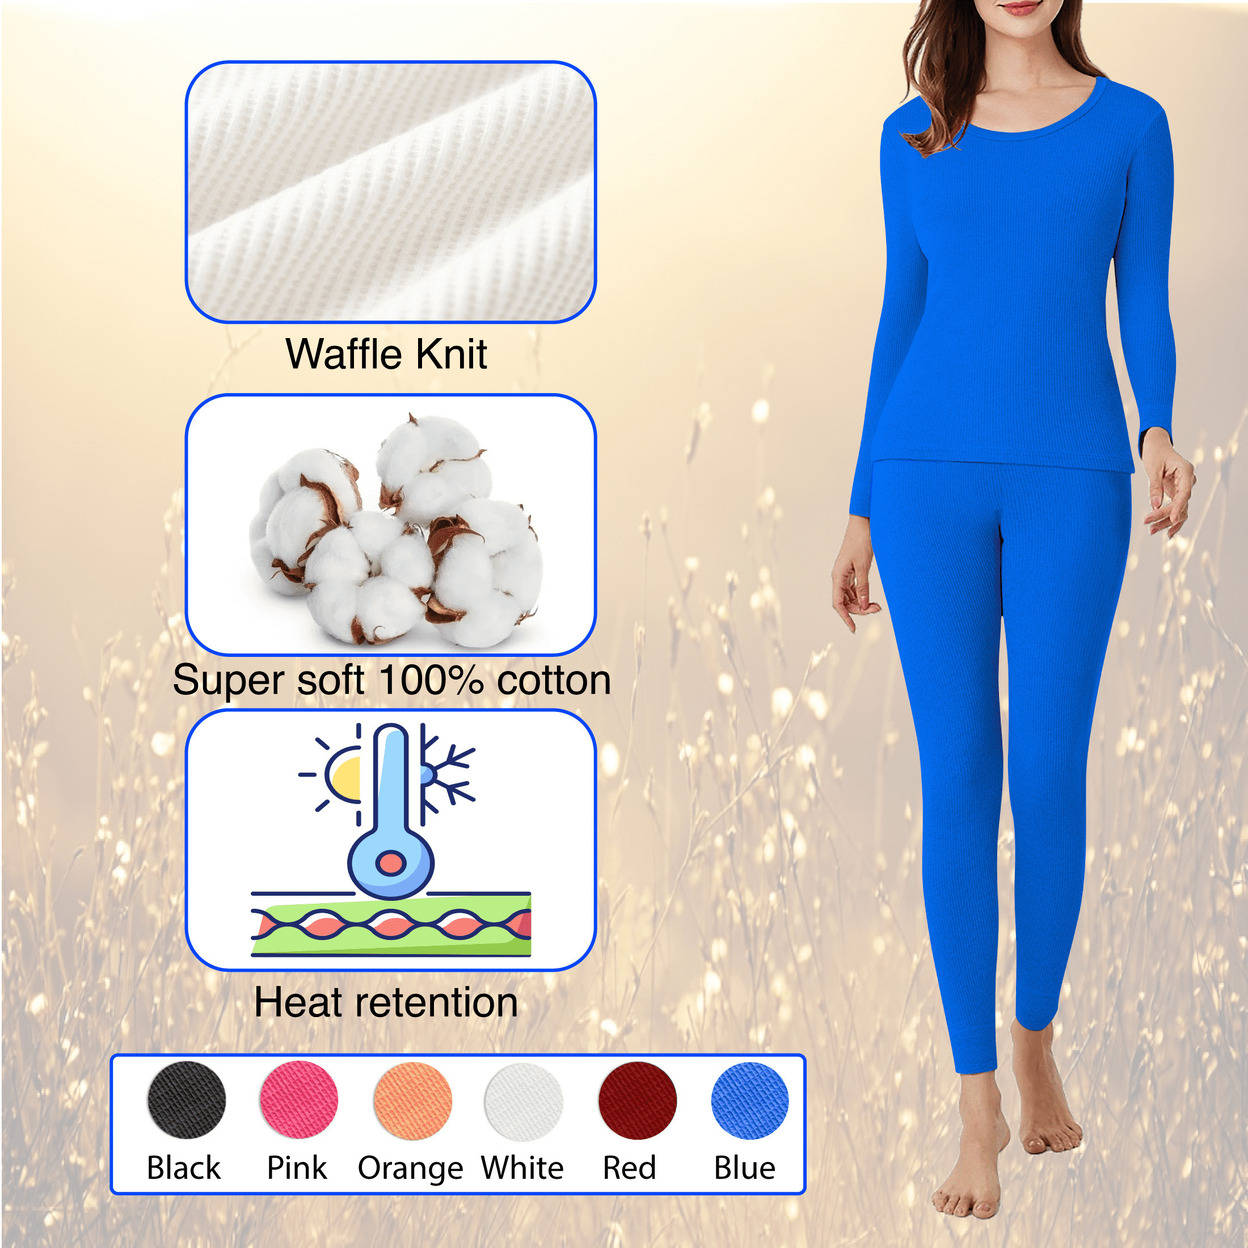 2-Piece: Women's Ultra Soft Cotton Waffle Knit Thermal Sets - Pink, Xx-large